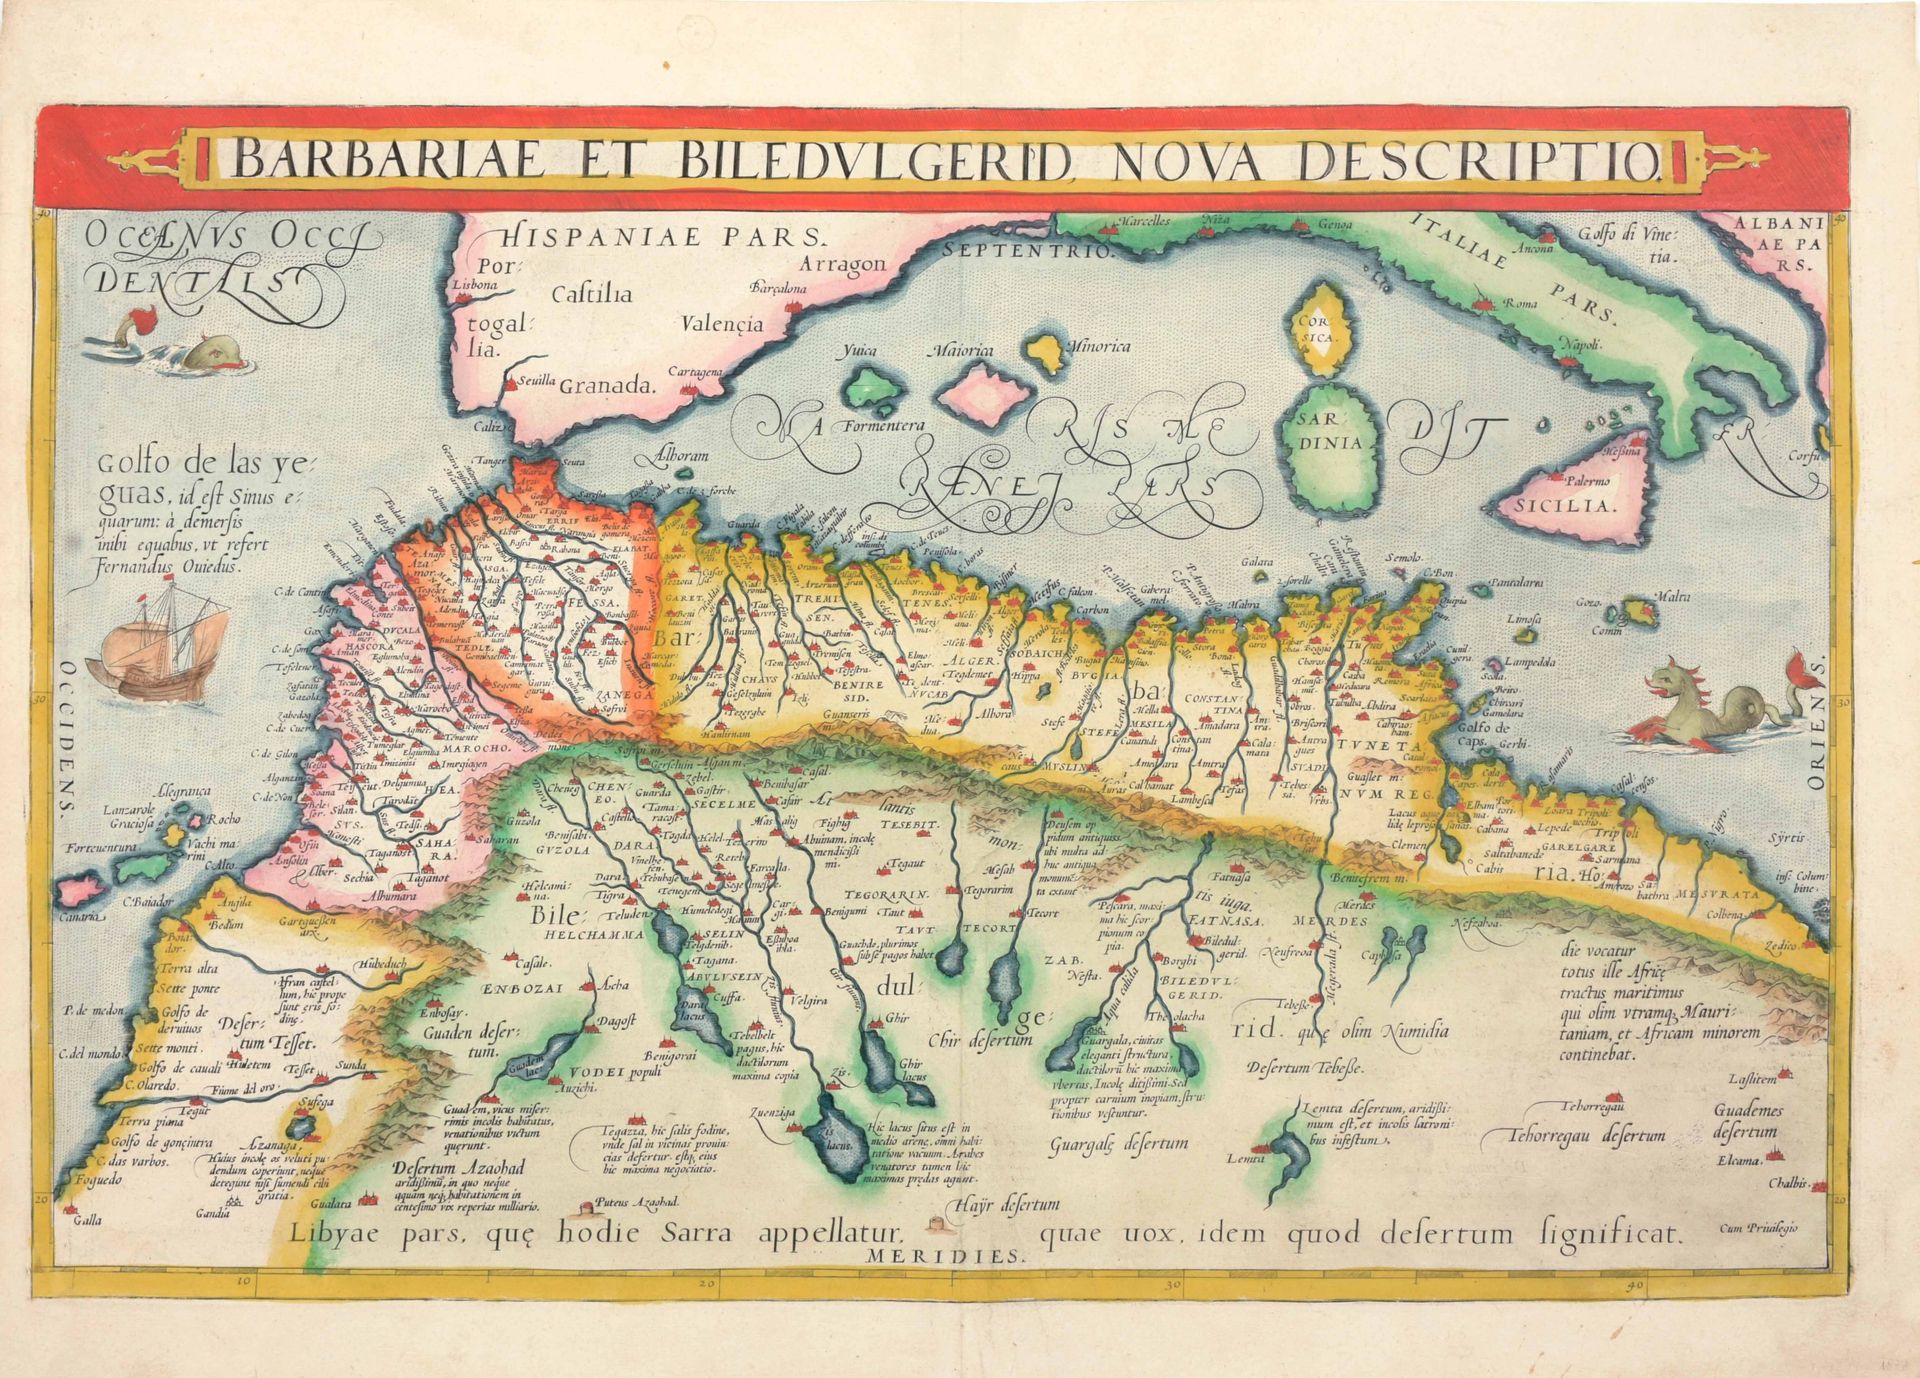 [NORTH AFRICA] Barbariae et Biledvlgerid nova descriptio

Mappa a mano (33 x 50 &hellip;